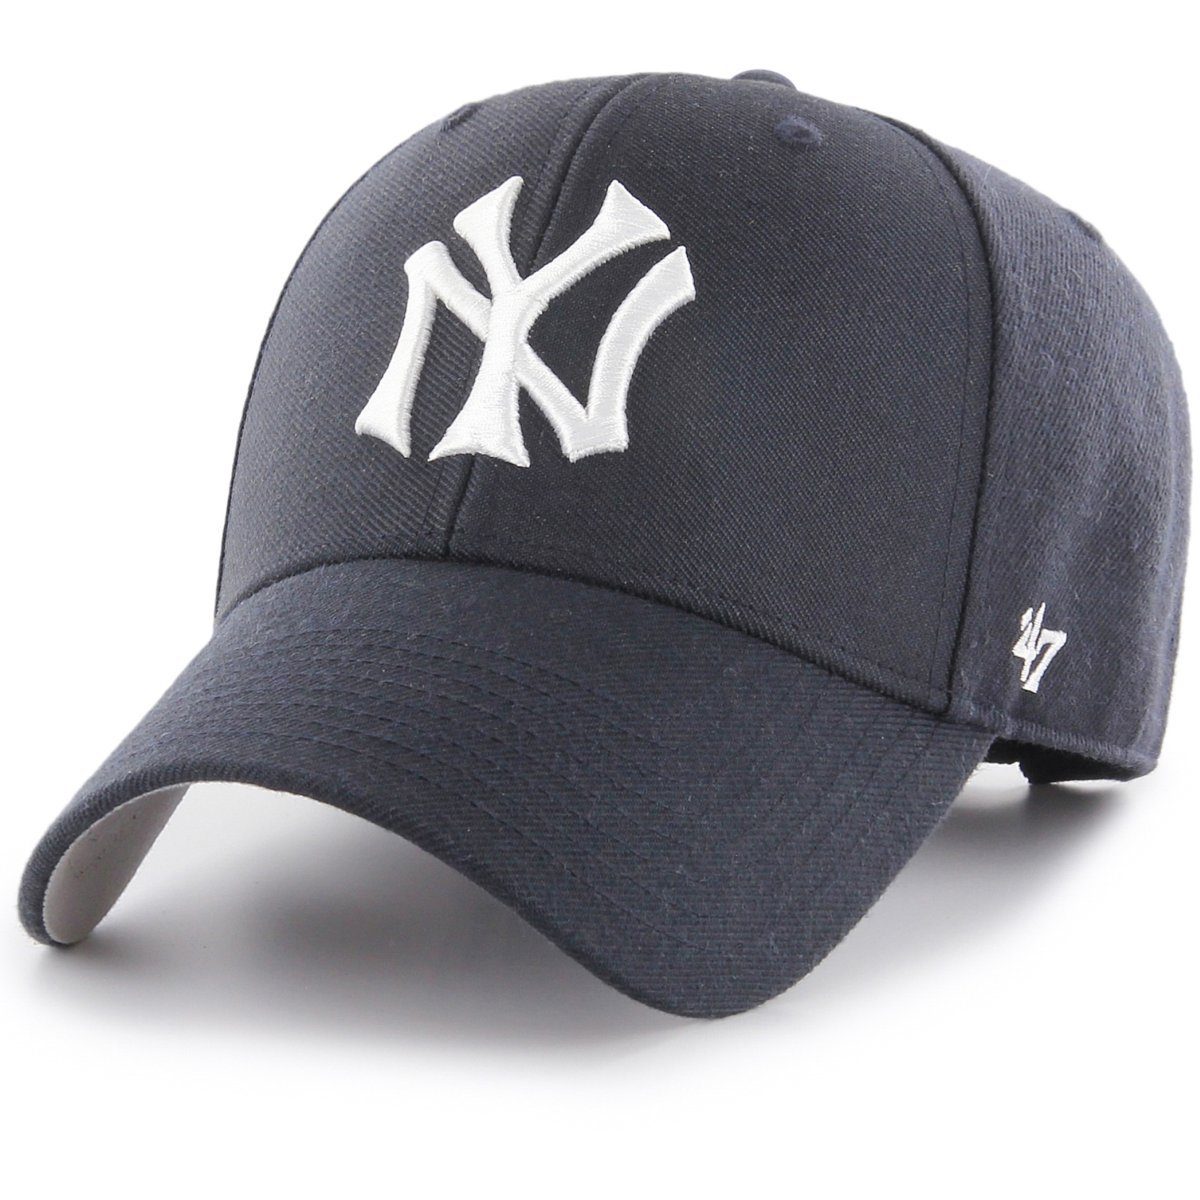 x27;47 Brand MLB York New Cap Yankees Baseball